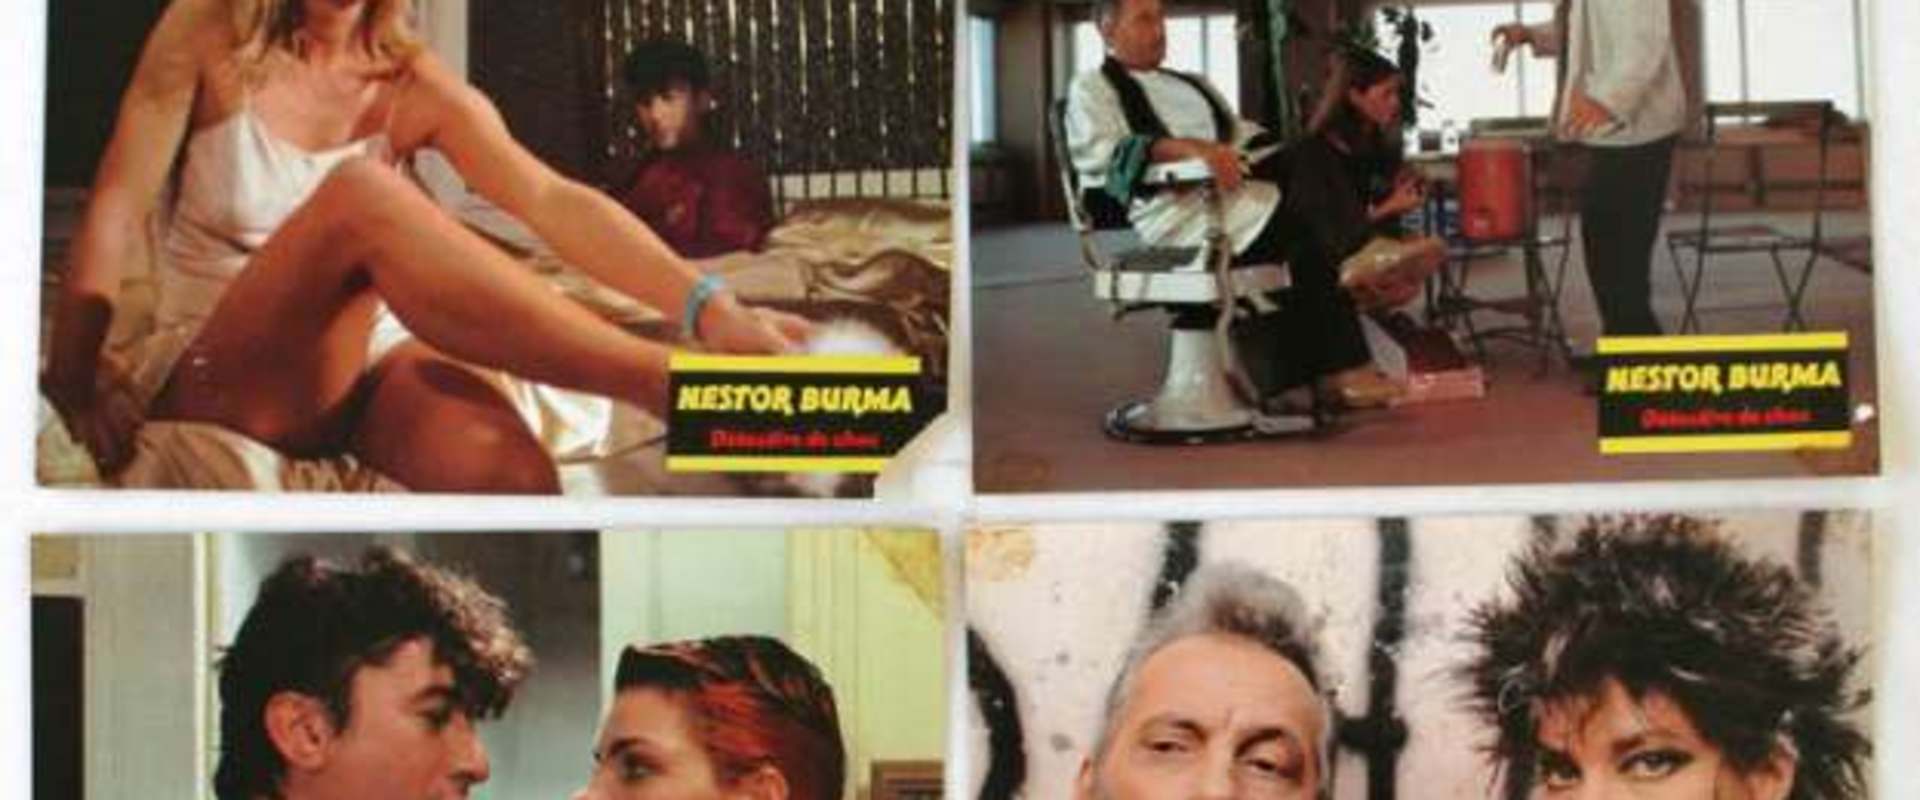 Nestor Burma, détective de choc background 1